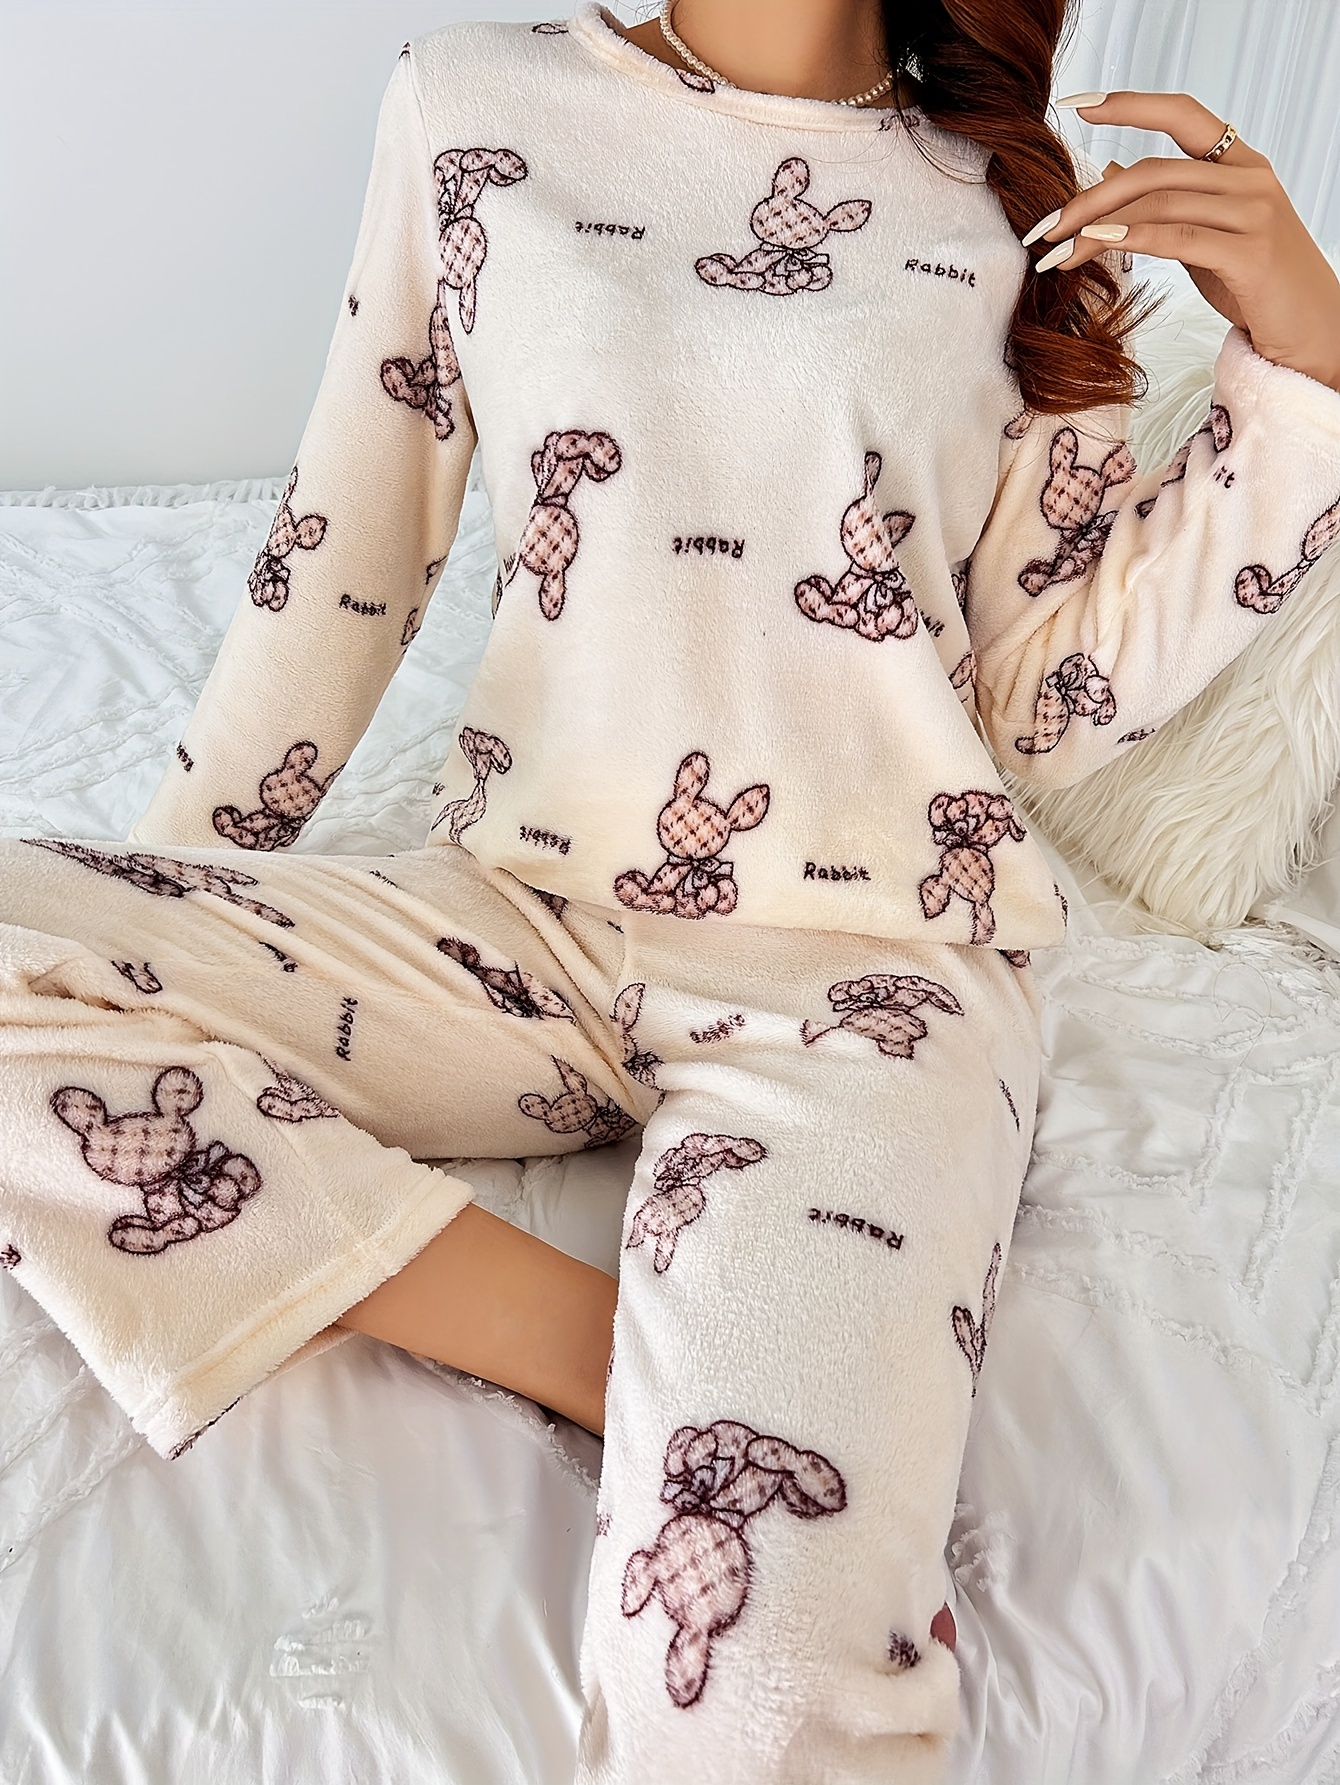 Cartoon Animal Print Pajama Set, Long Sleeve Crew Neck Top & Elastic  Waistband Pants, Women's Sleepwear & Loungewear